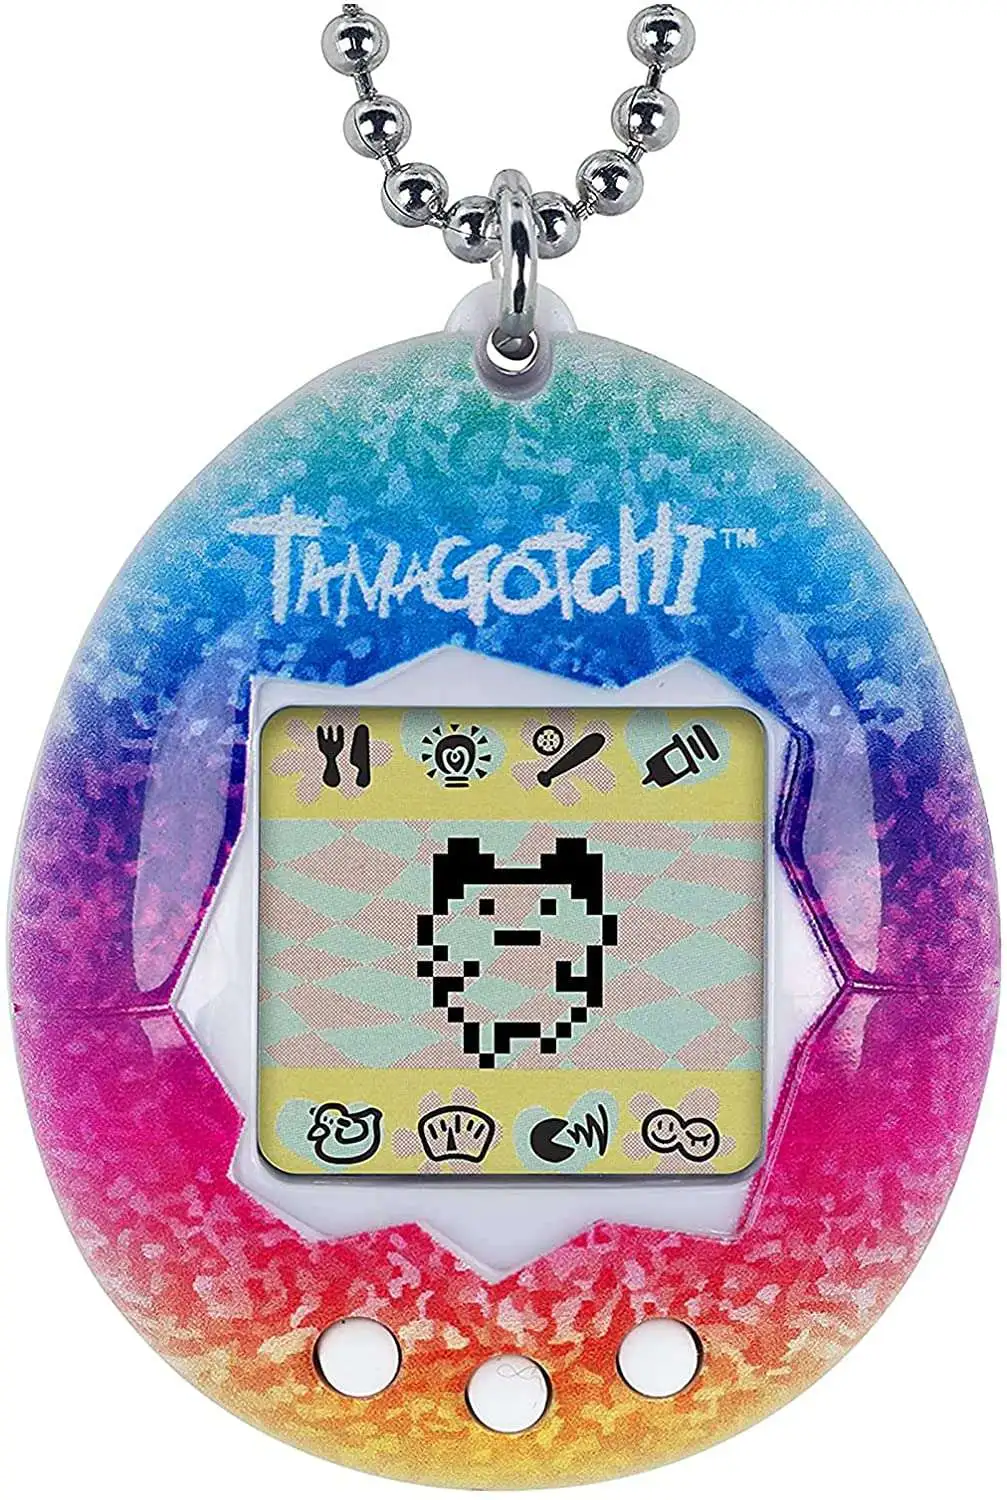 Unicorn Tamagotchi The Original Gen 1 Rainbow 1.5-Inch Virtual Pet Toy 